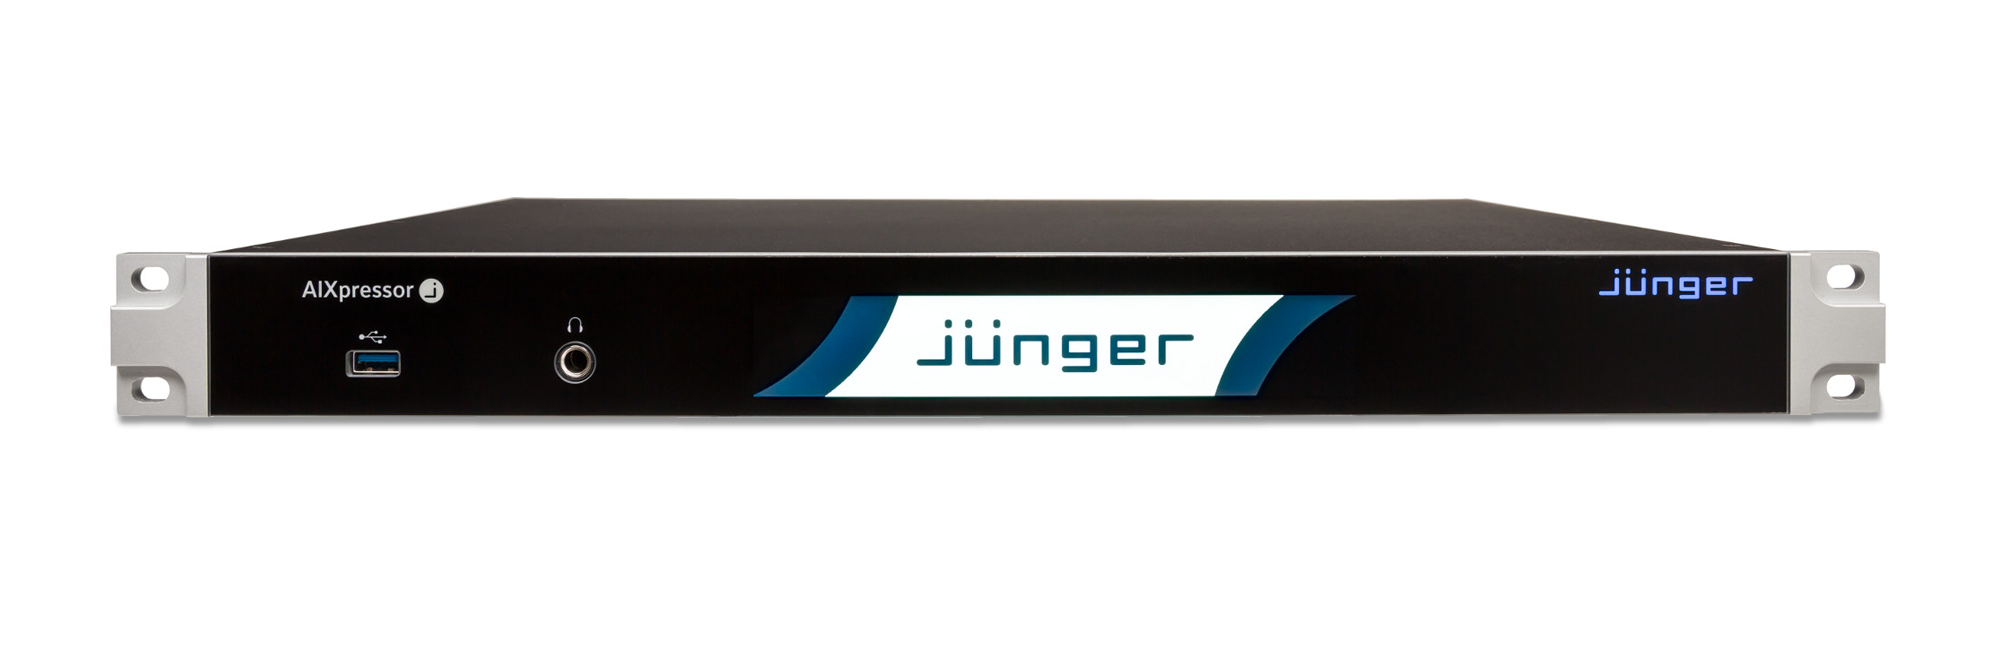 Brand new  professional audio processor & audio converter from Junger Audio the AIXpressor Telos Alliance